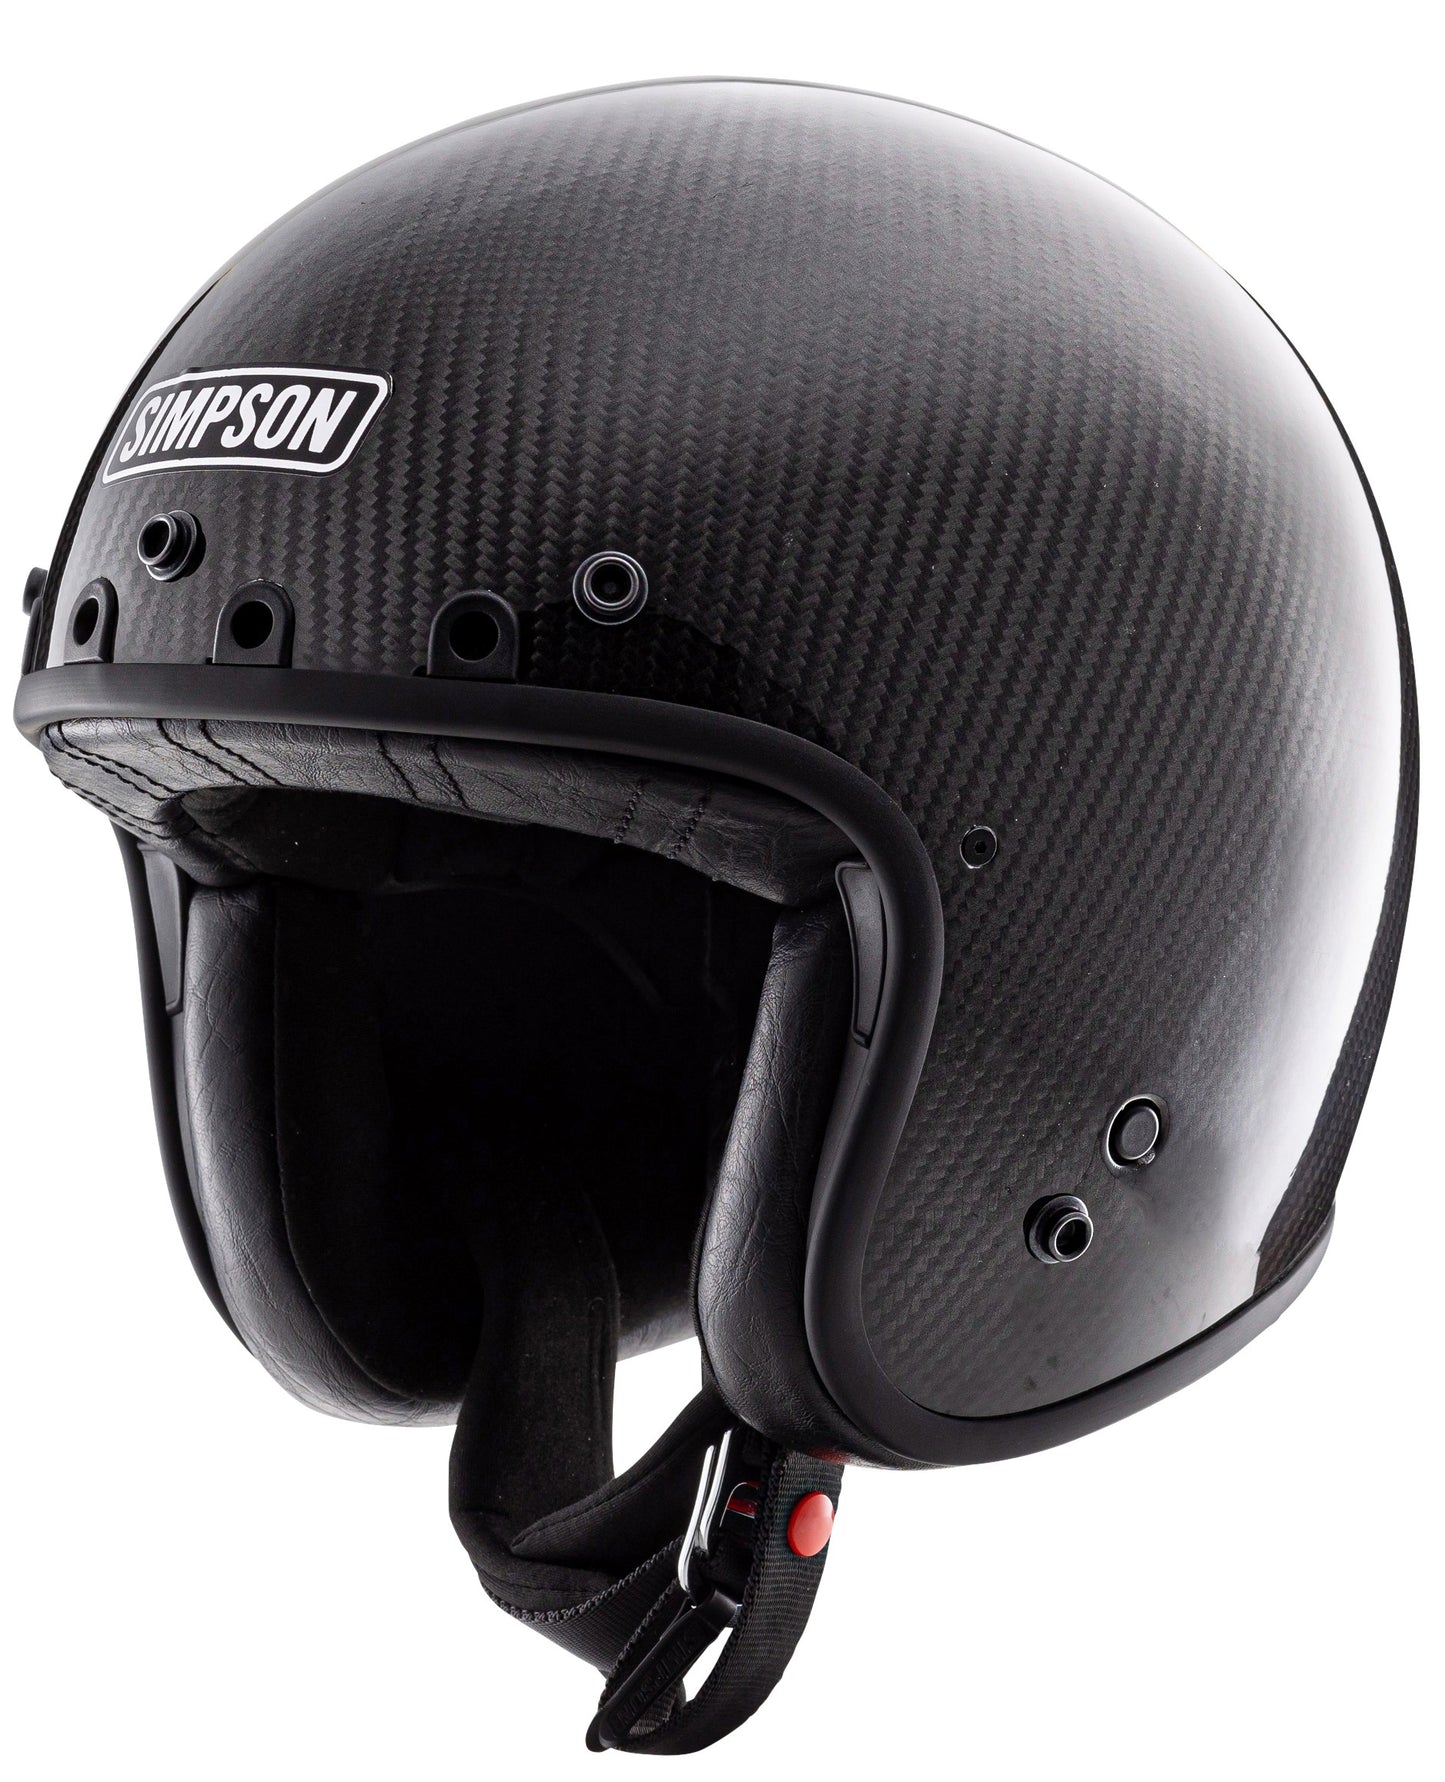 Simpson Chopper Helmet - Carbon Fiber